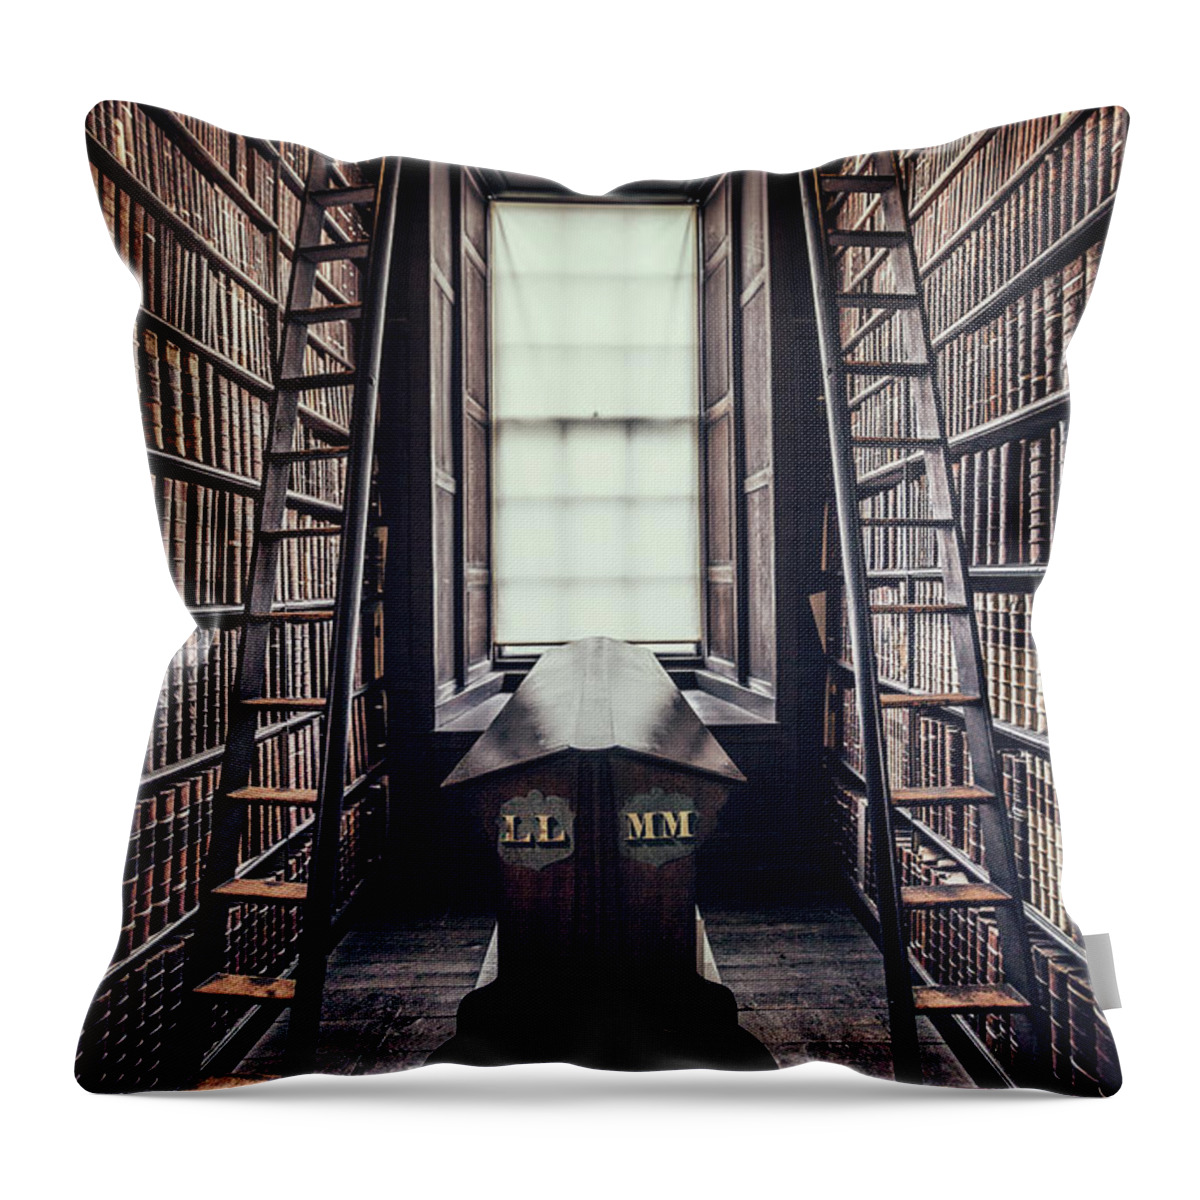 Kremsdorf Throw Pillow featuring the photograph Walls Of Books by Evelina Kremsdorf